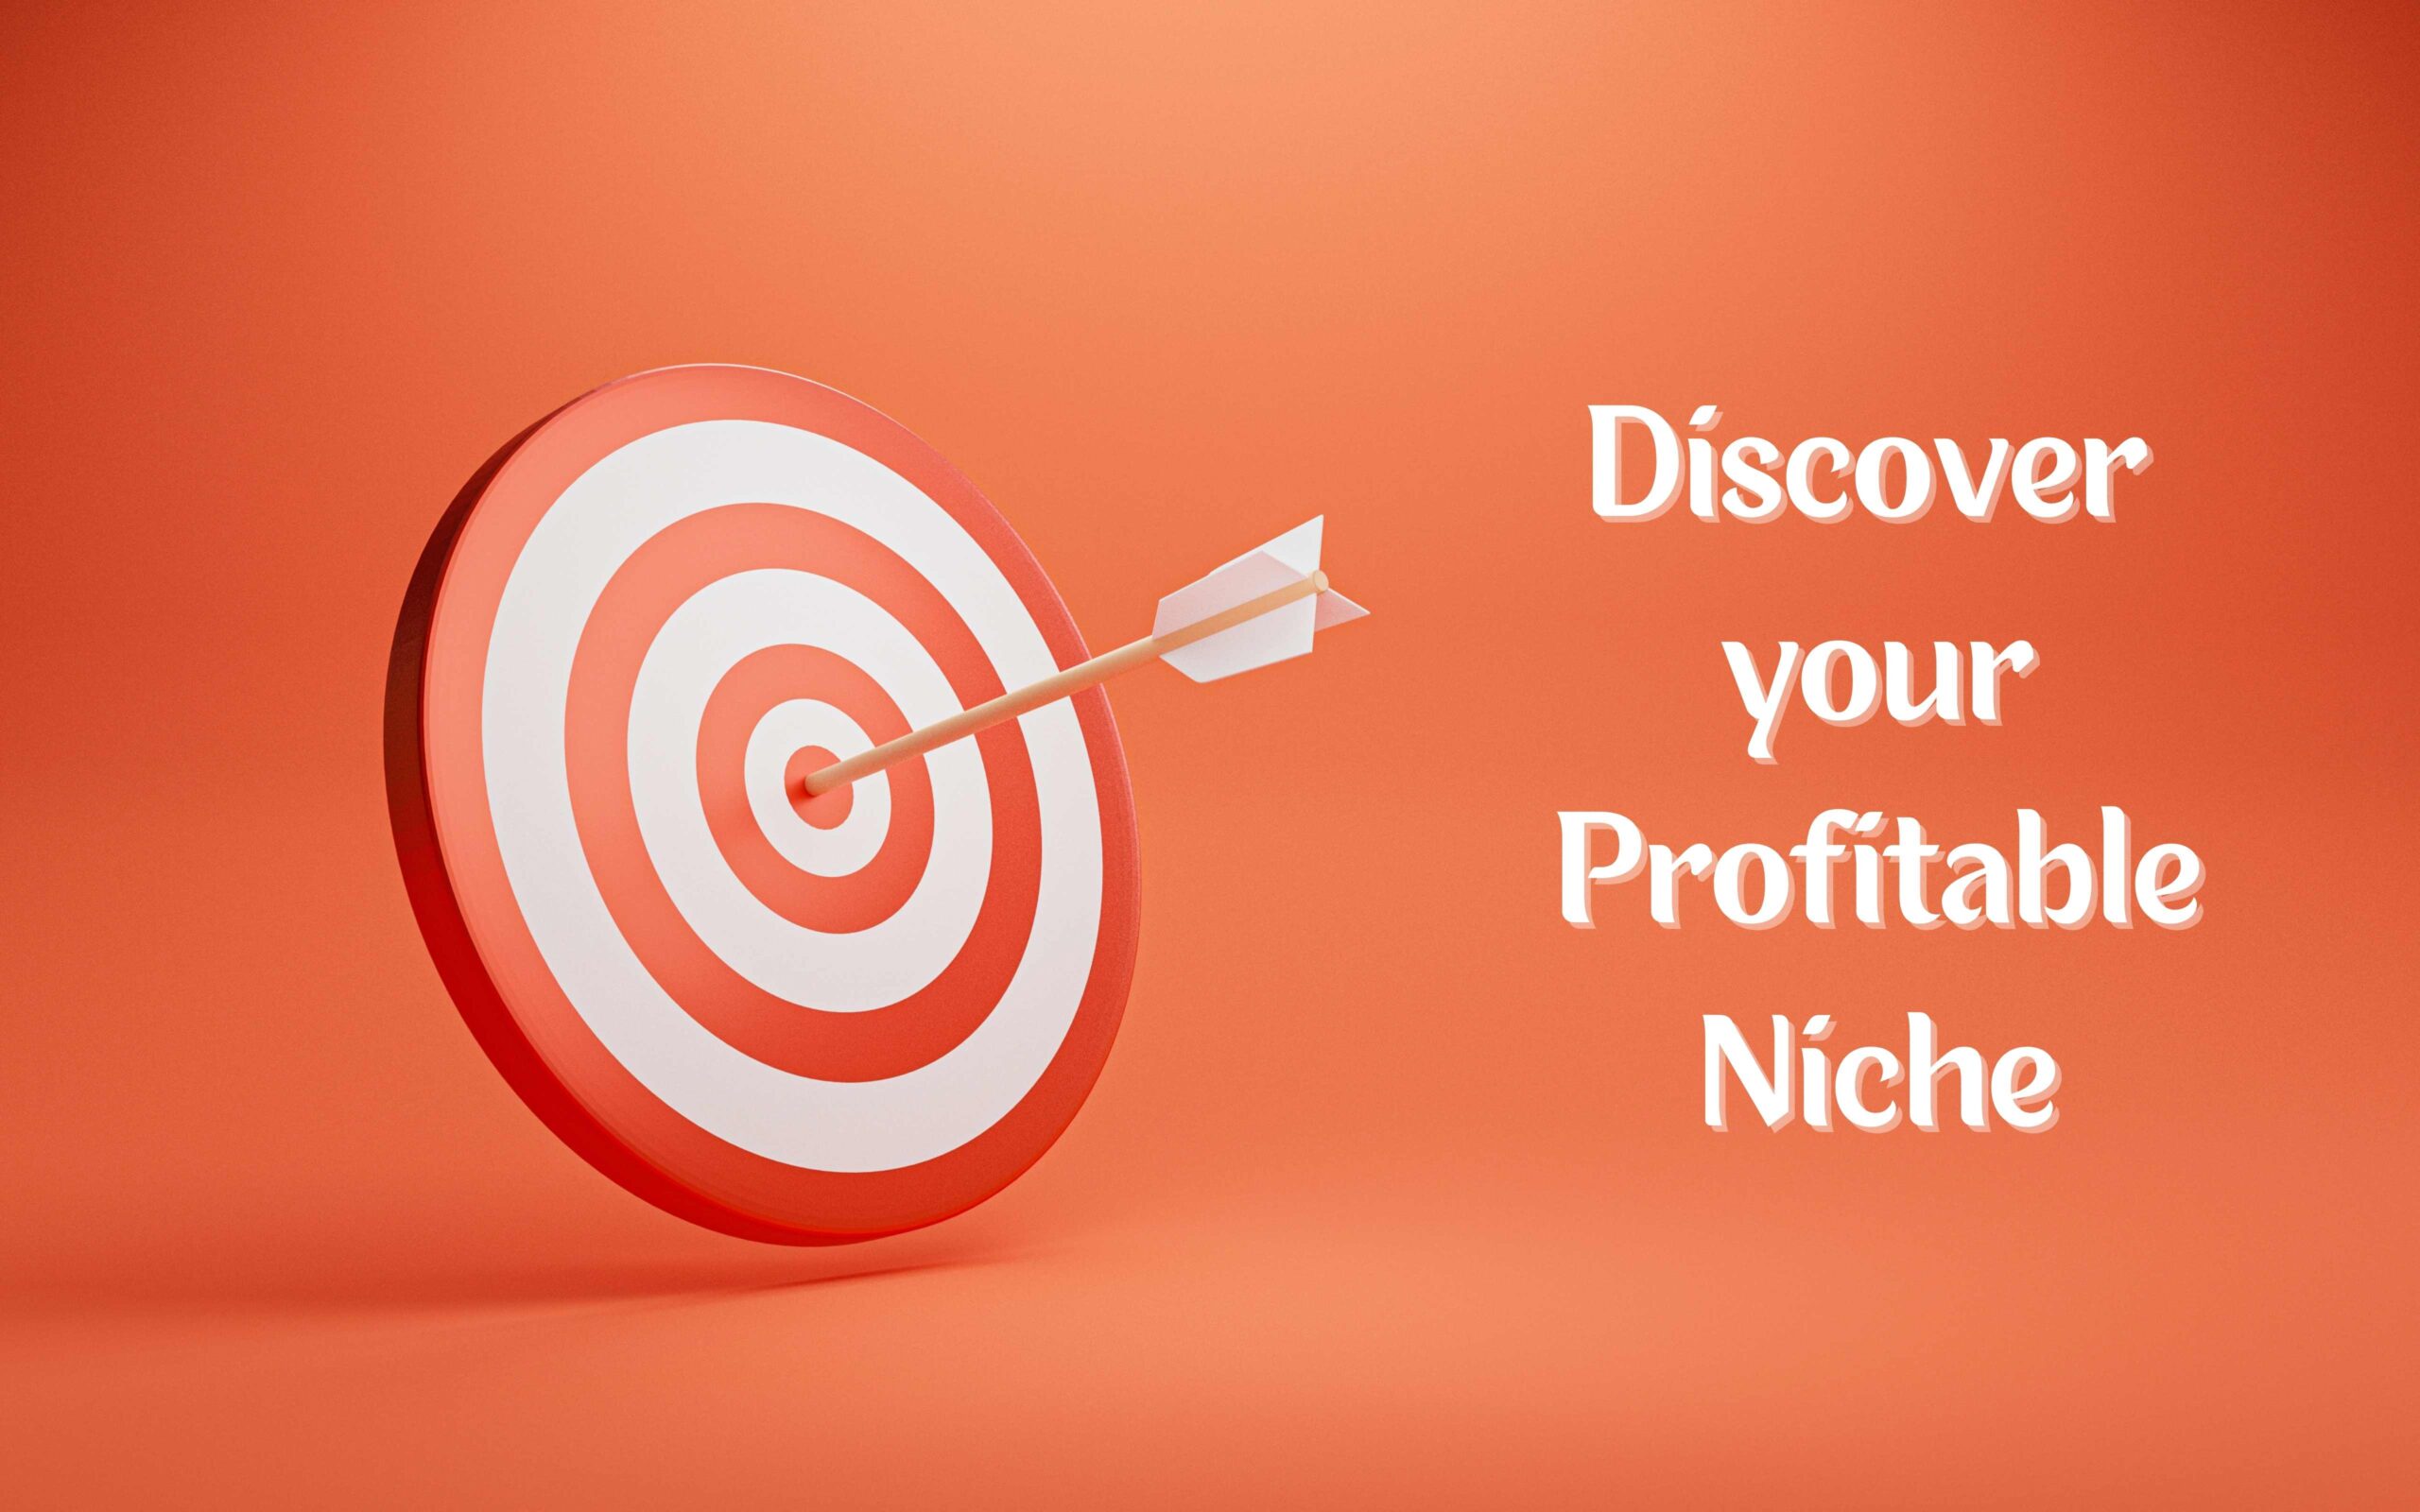 Discover your Profitable Niche